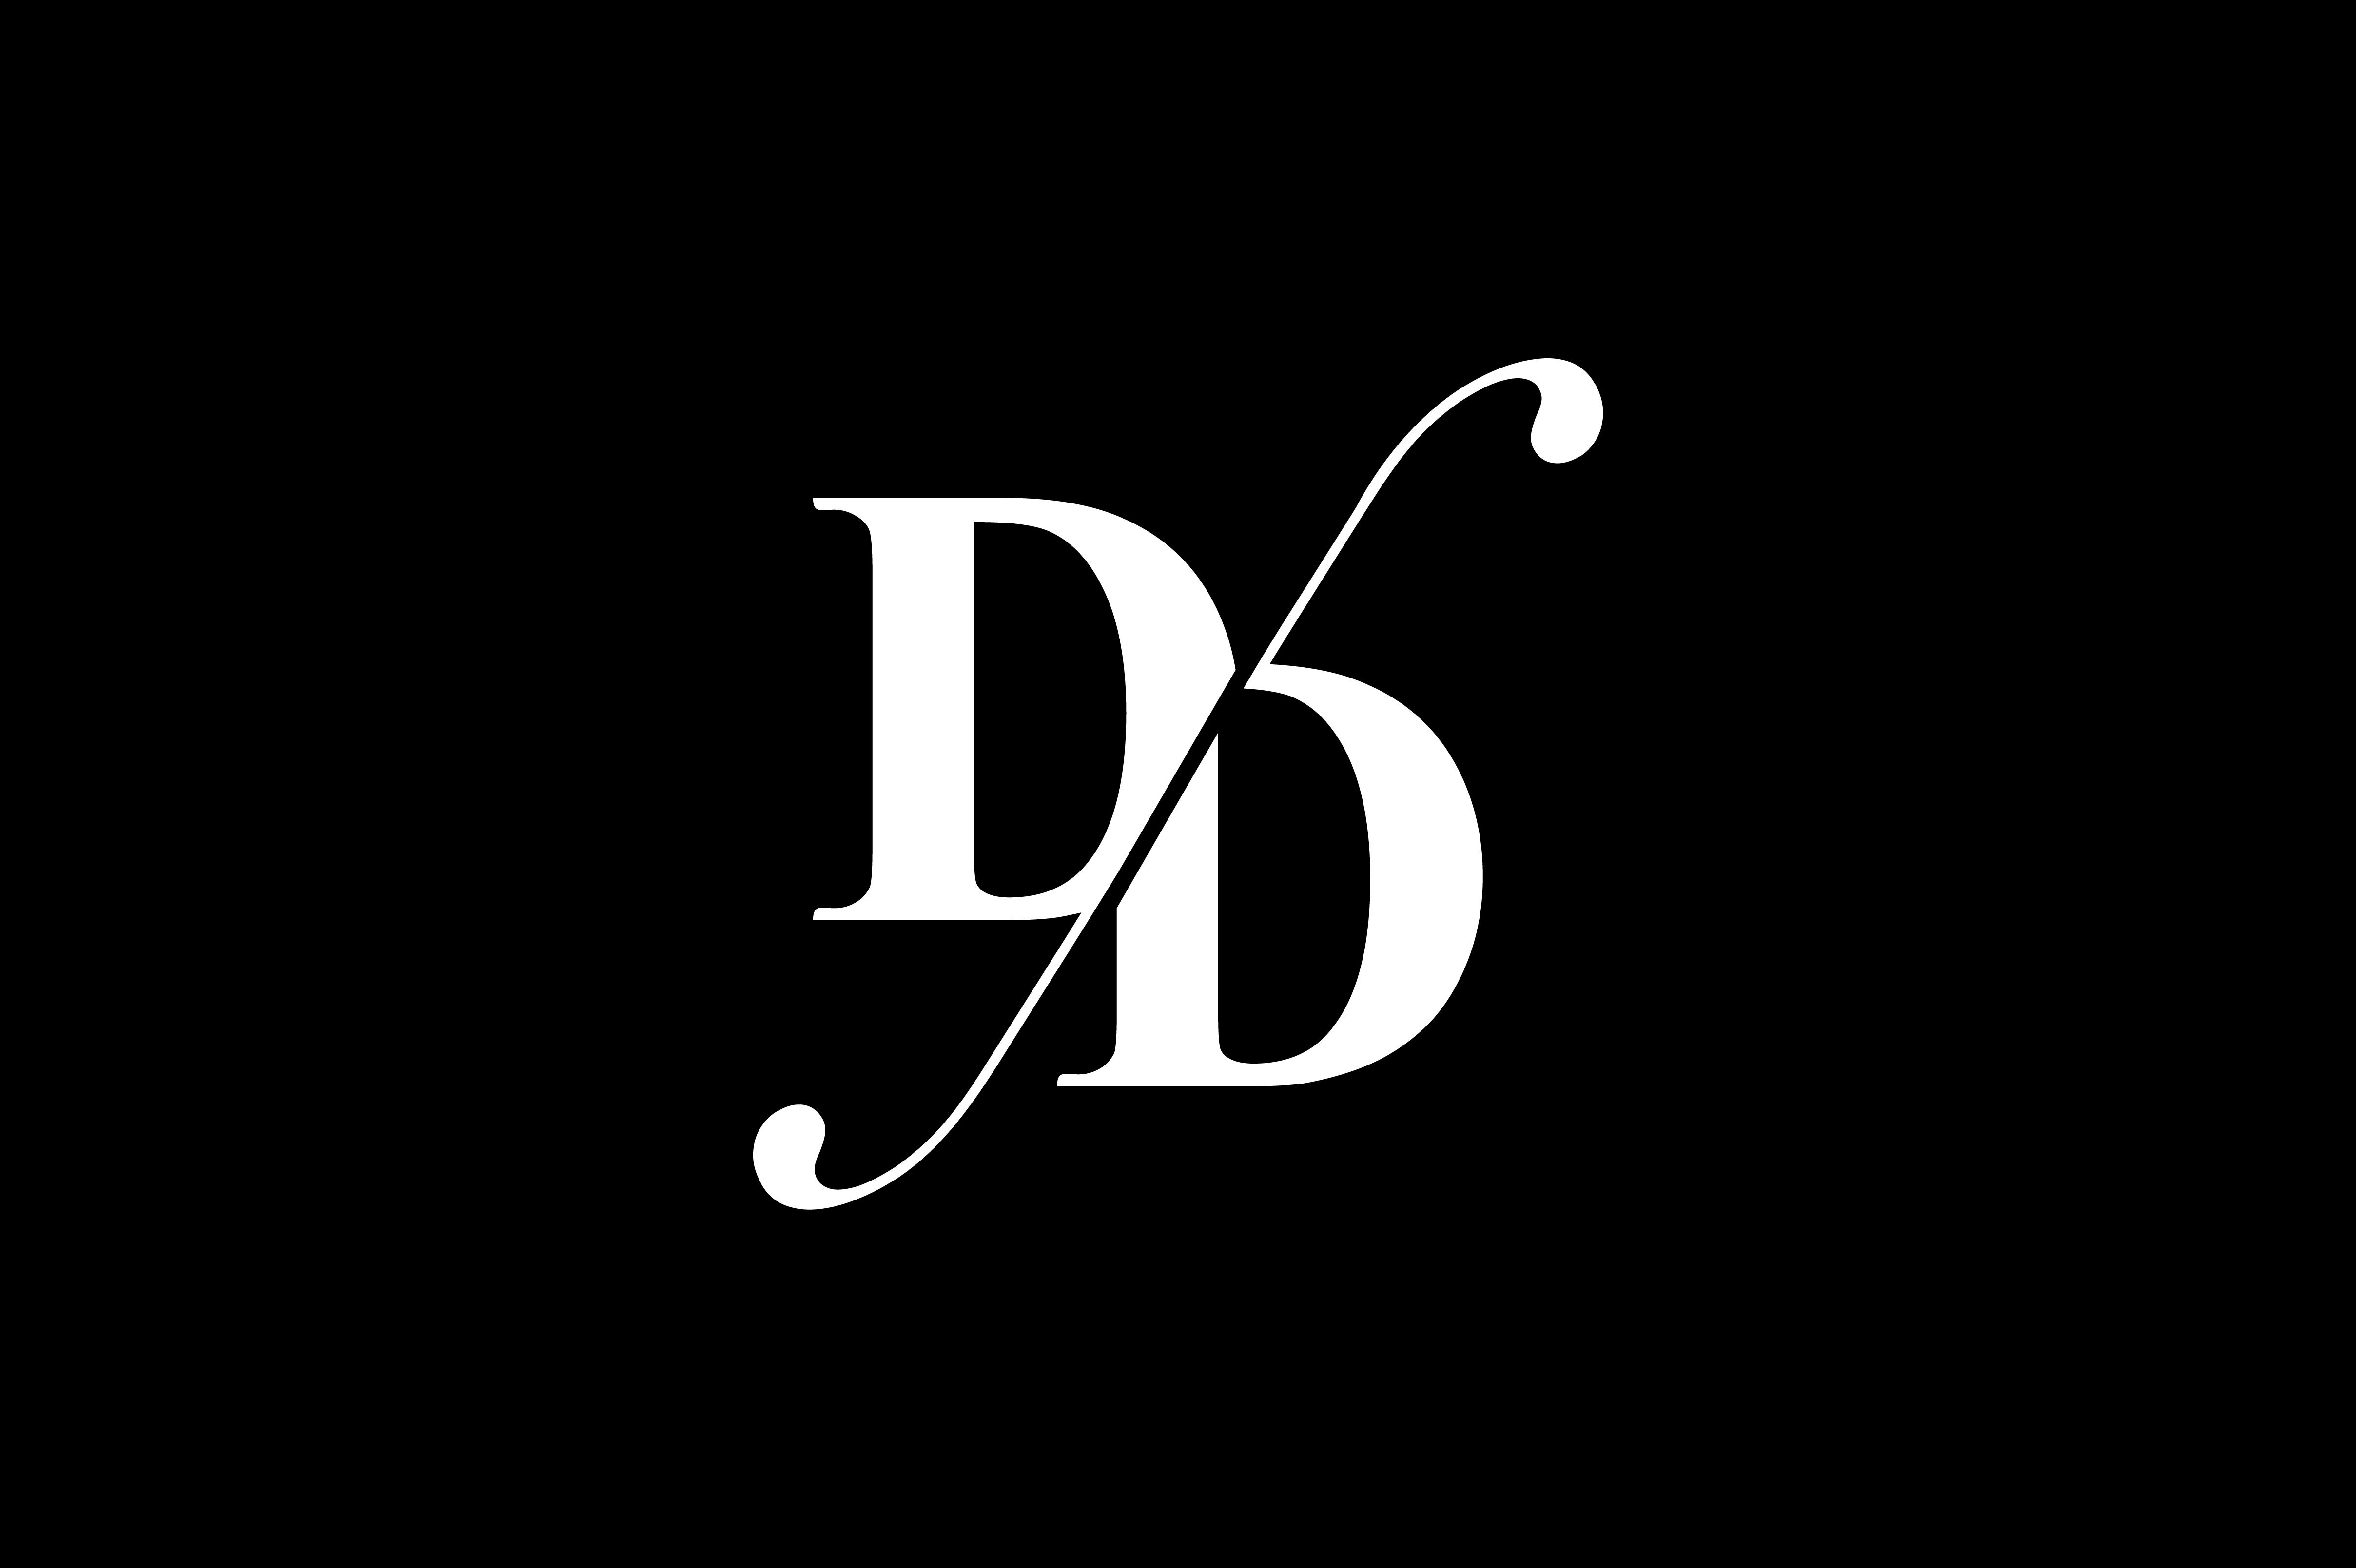 dd-monogram-logo-design-by-vectorseller-thehungryjpeg